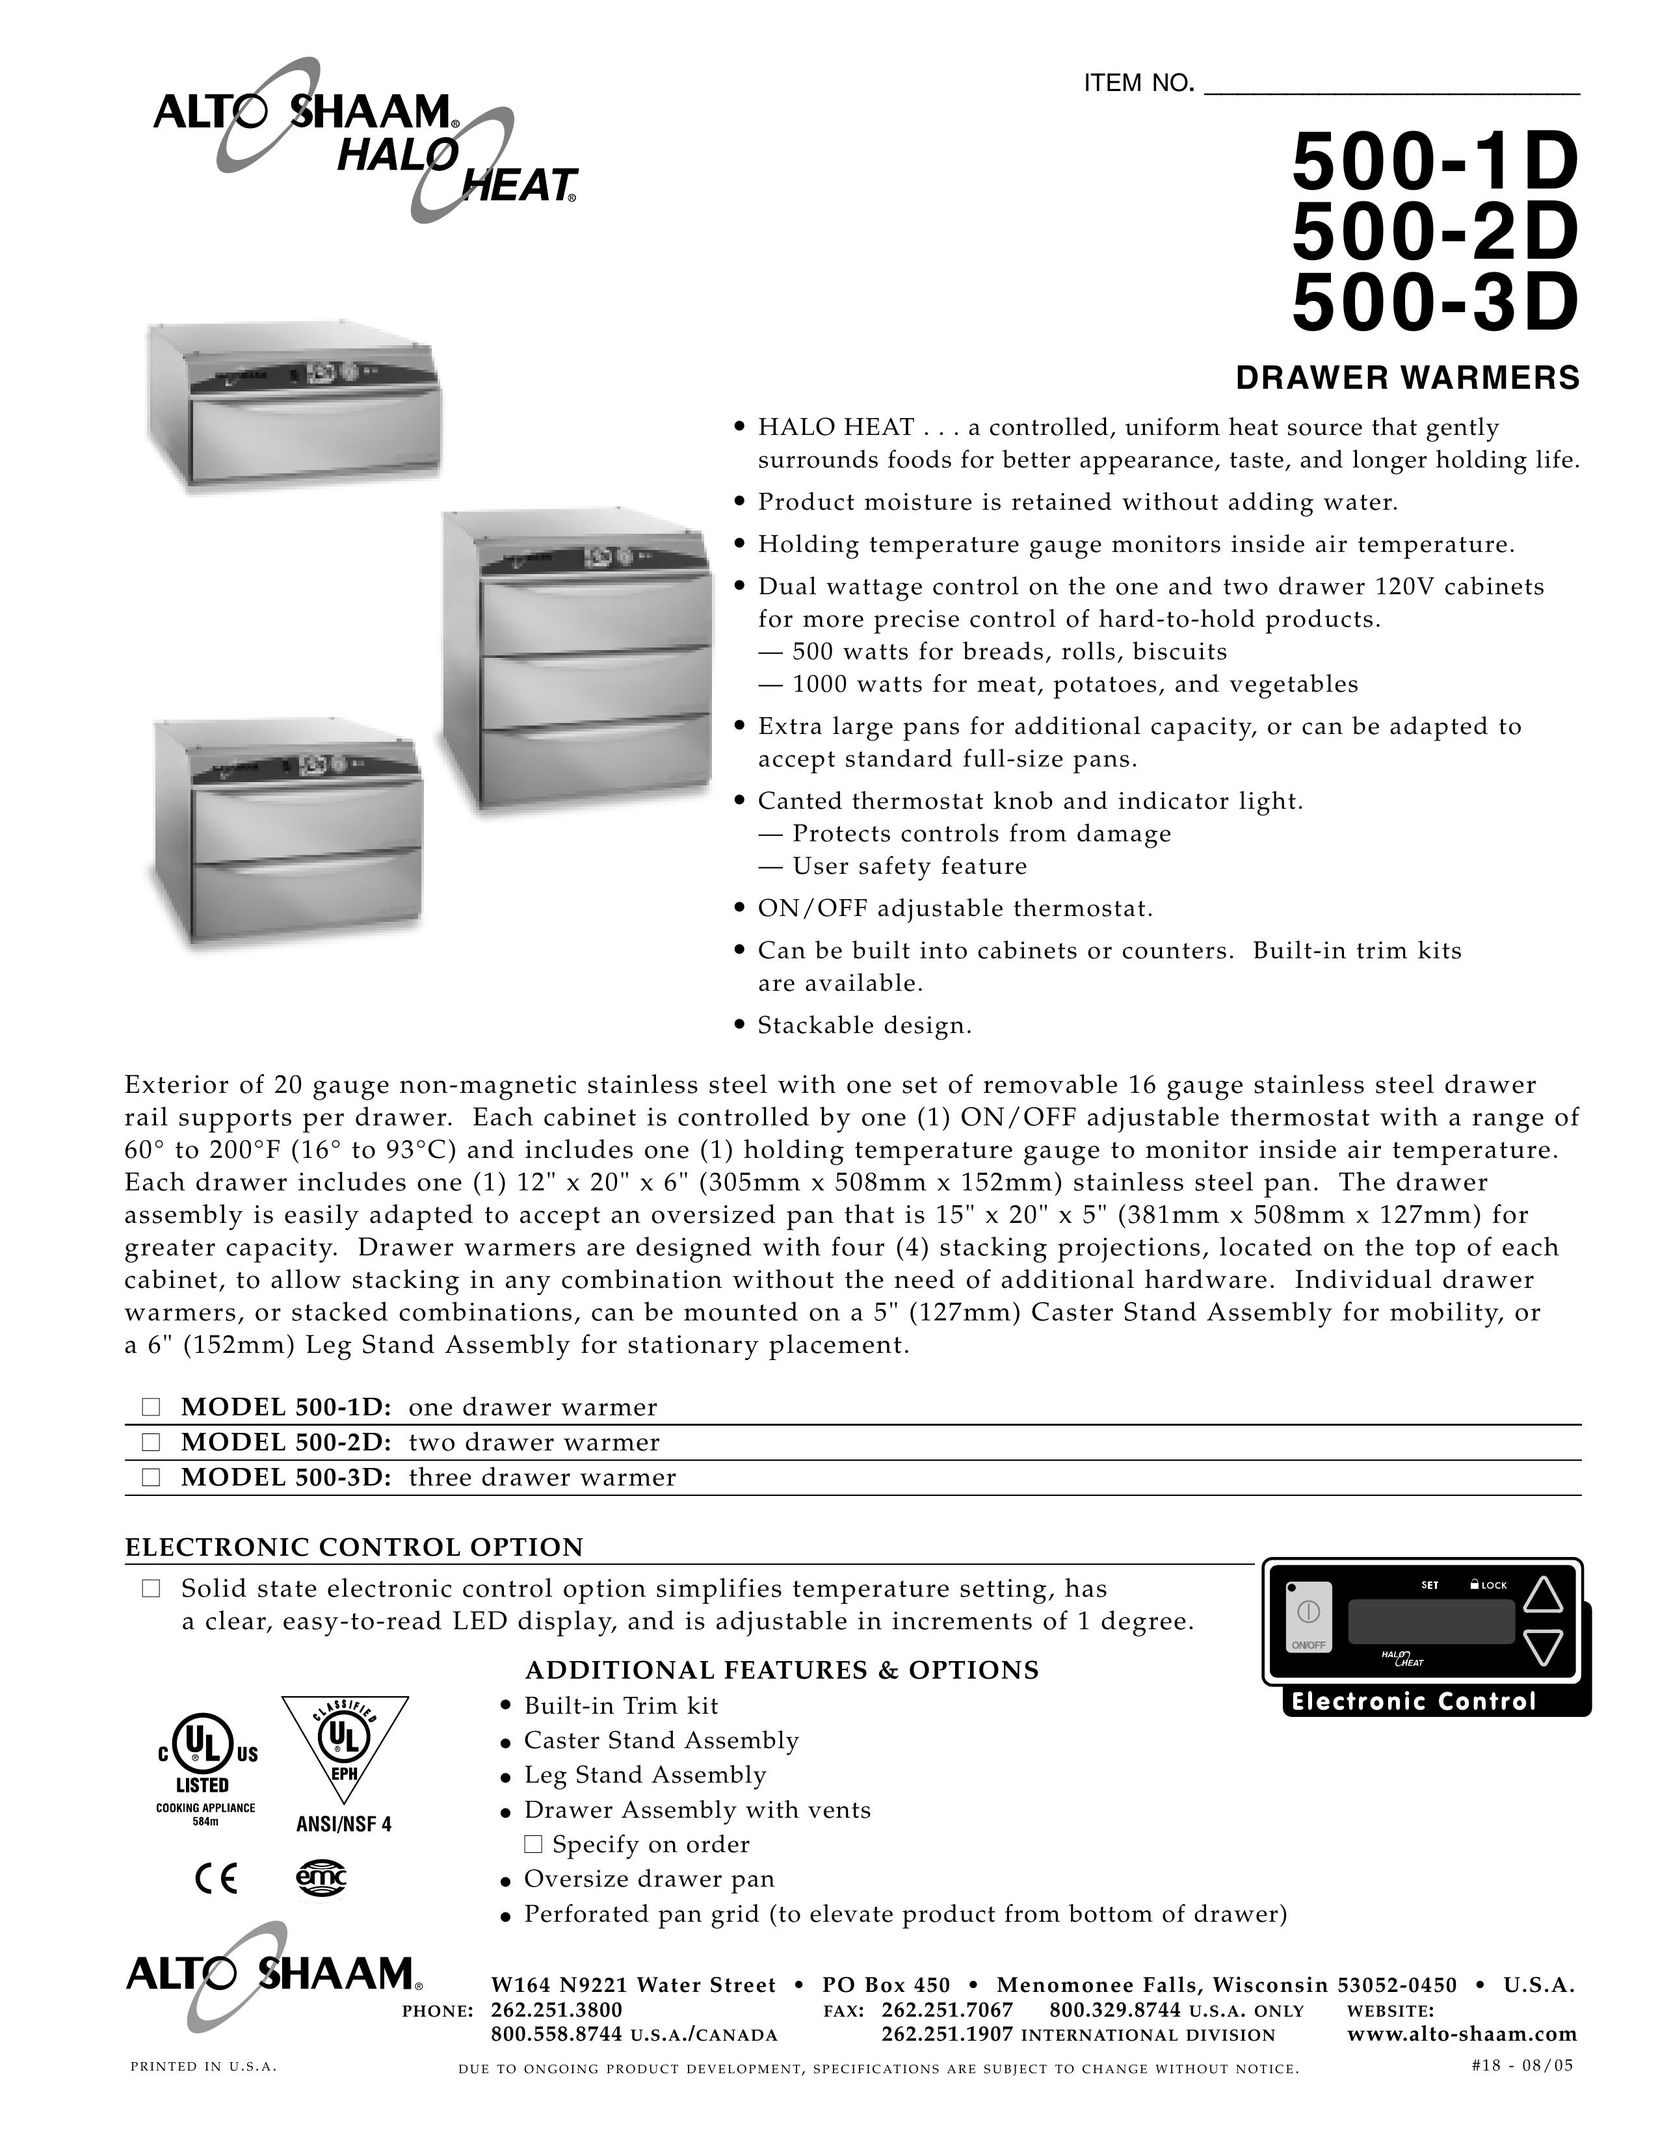 Alto-Shaam 500-2D Food Warmer User Manual